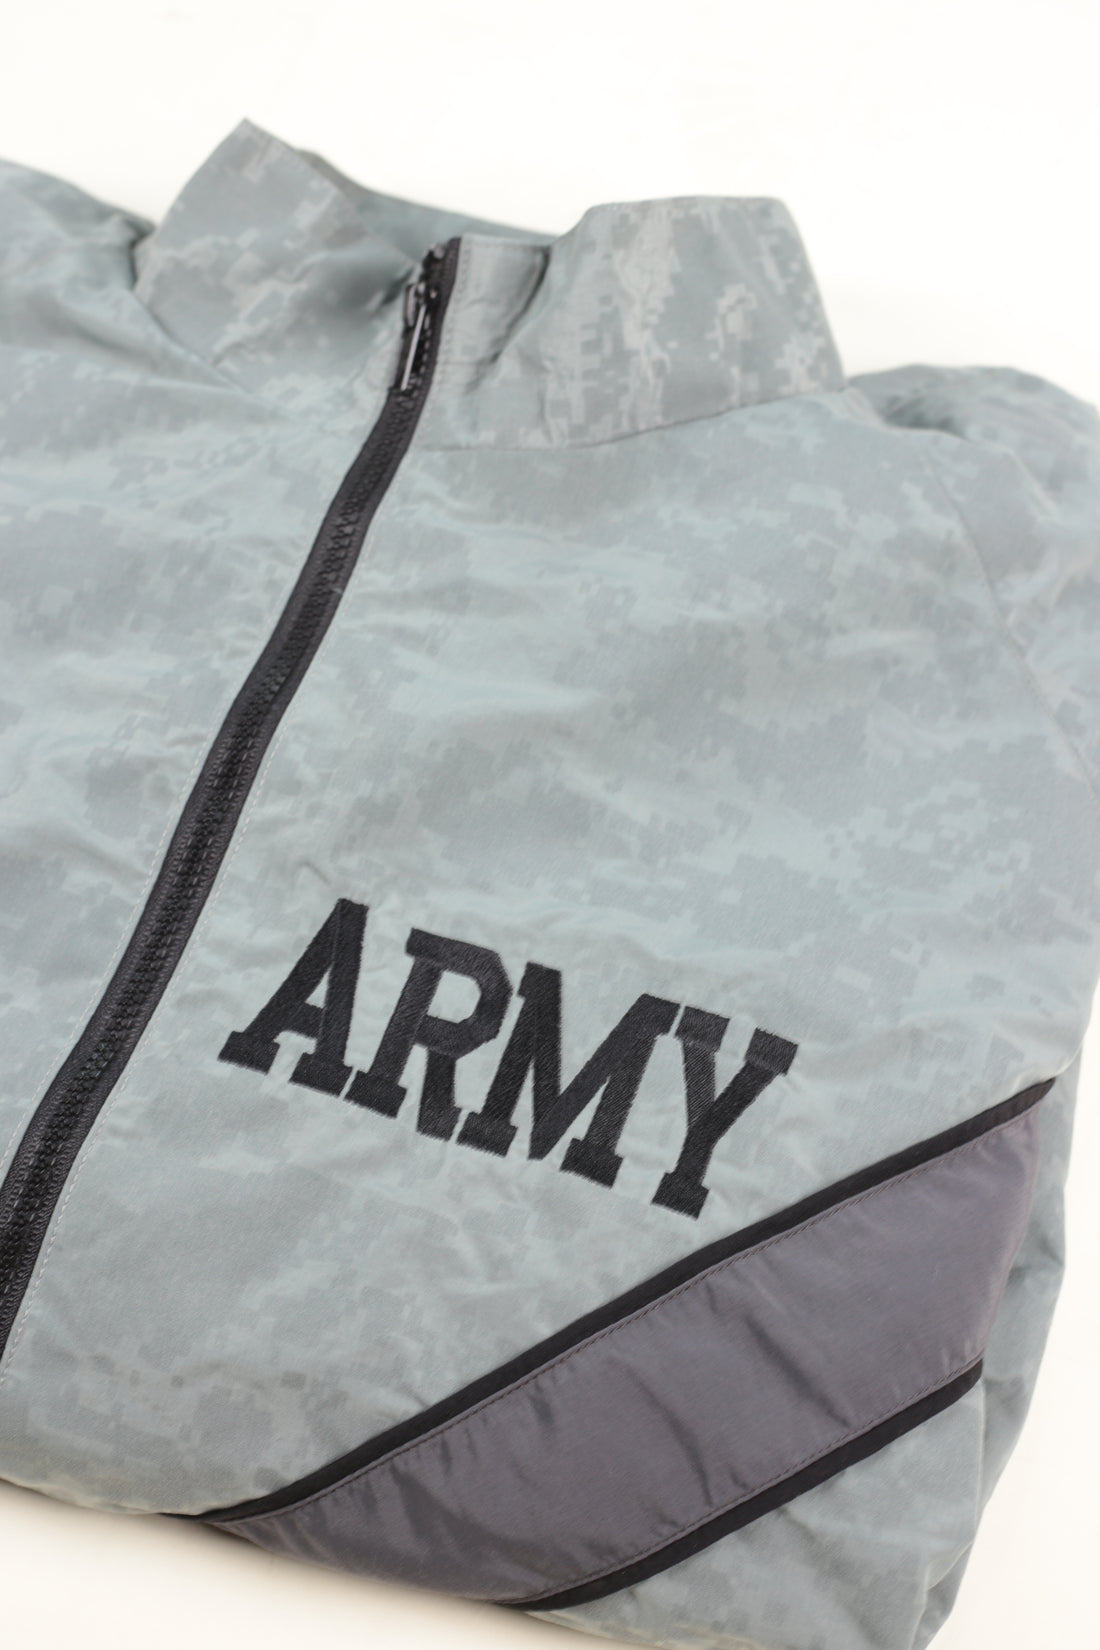 IPFU jacket reflective US ARMY